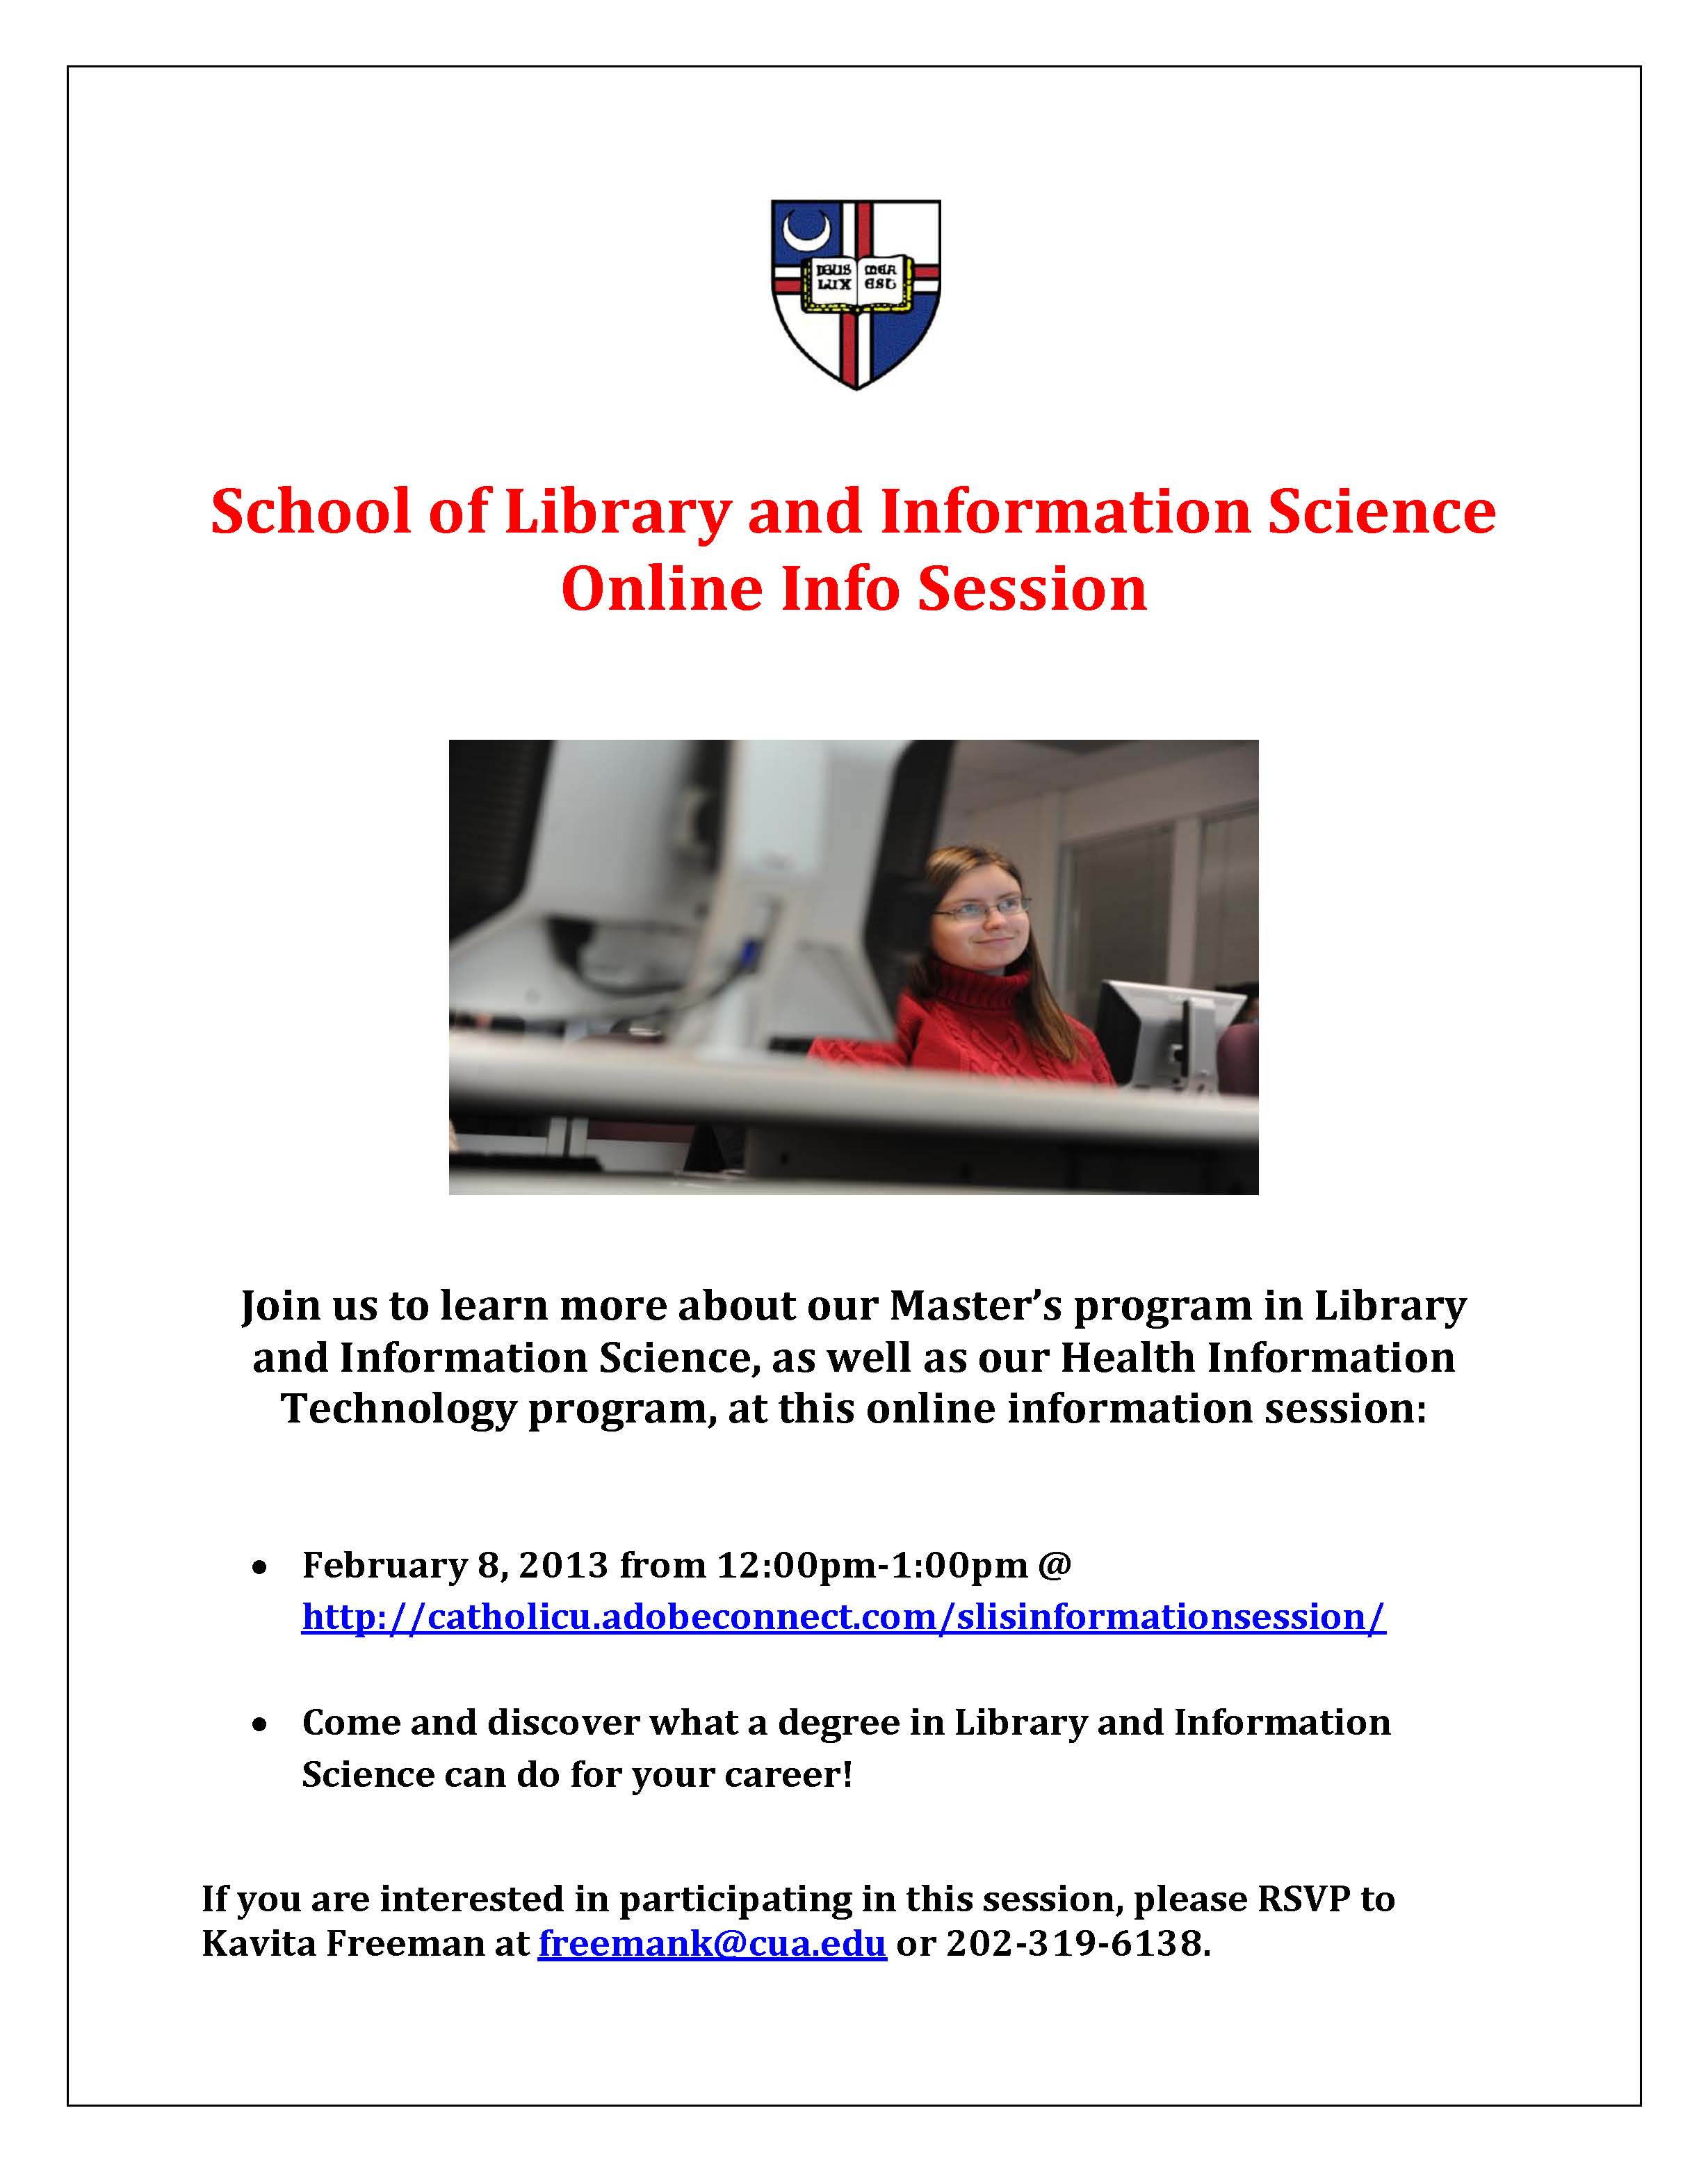 CUA - SLIS Online Information Session February 8